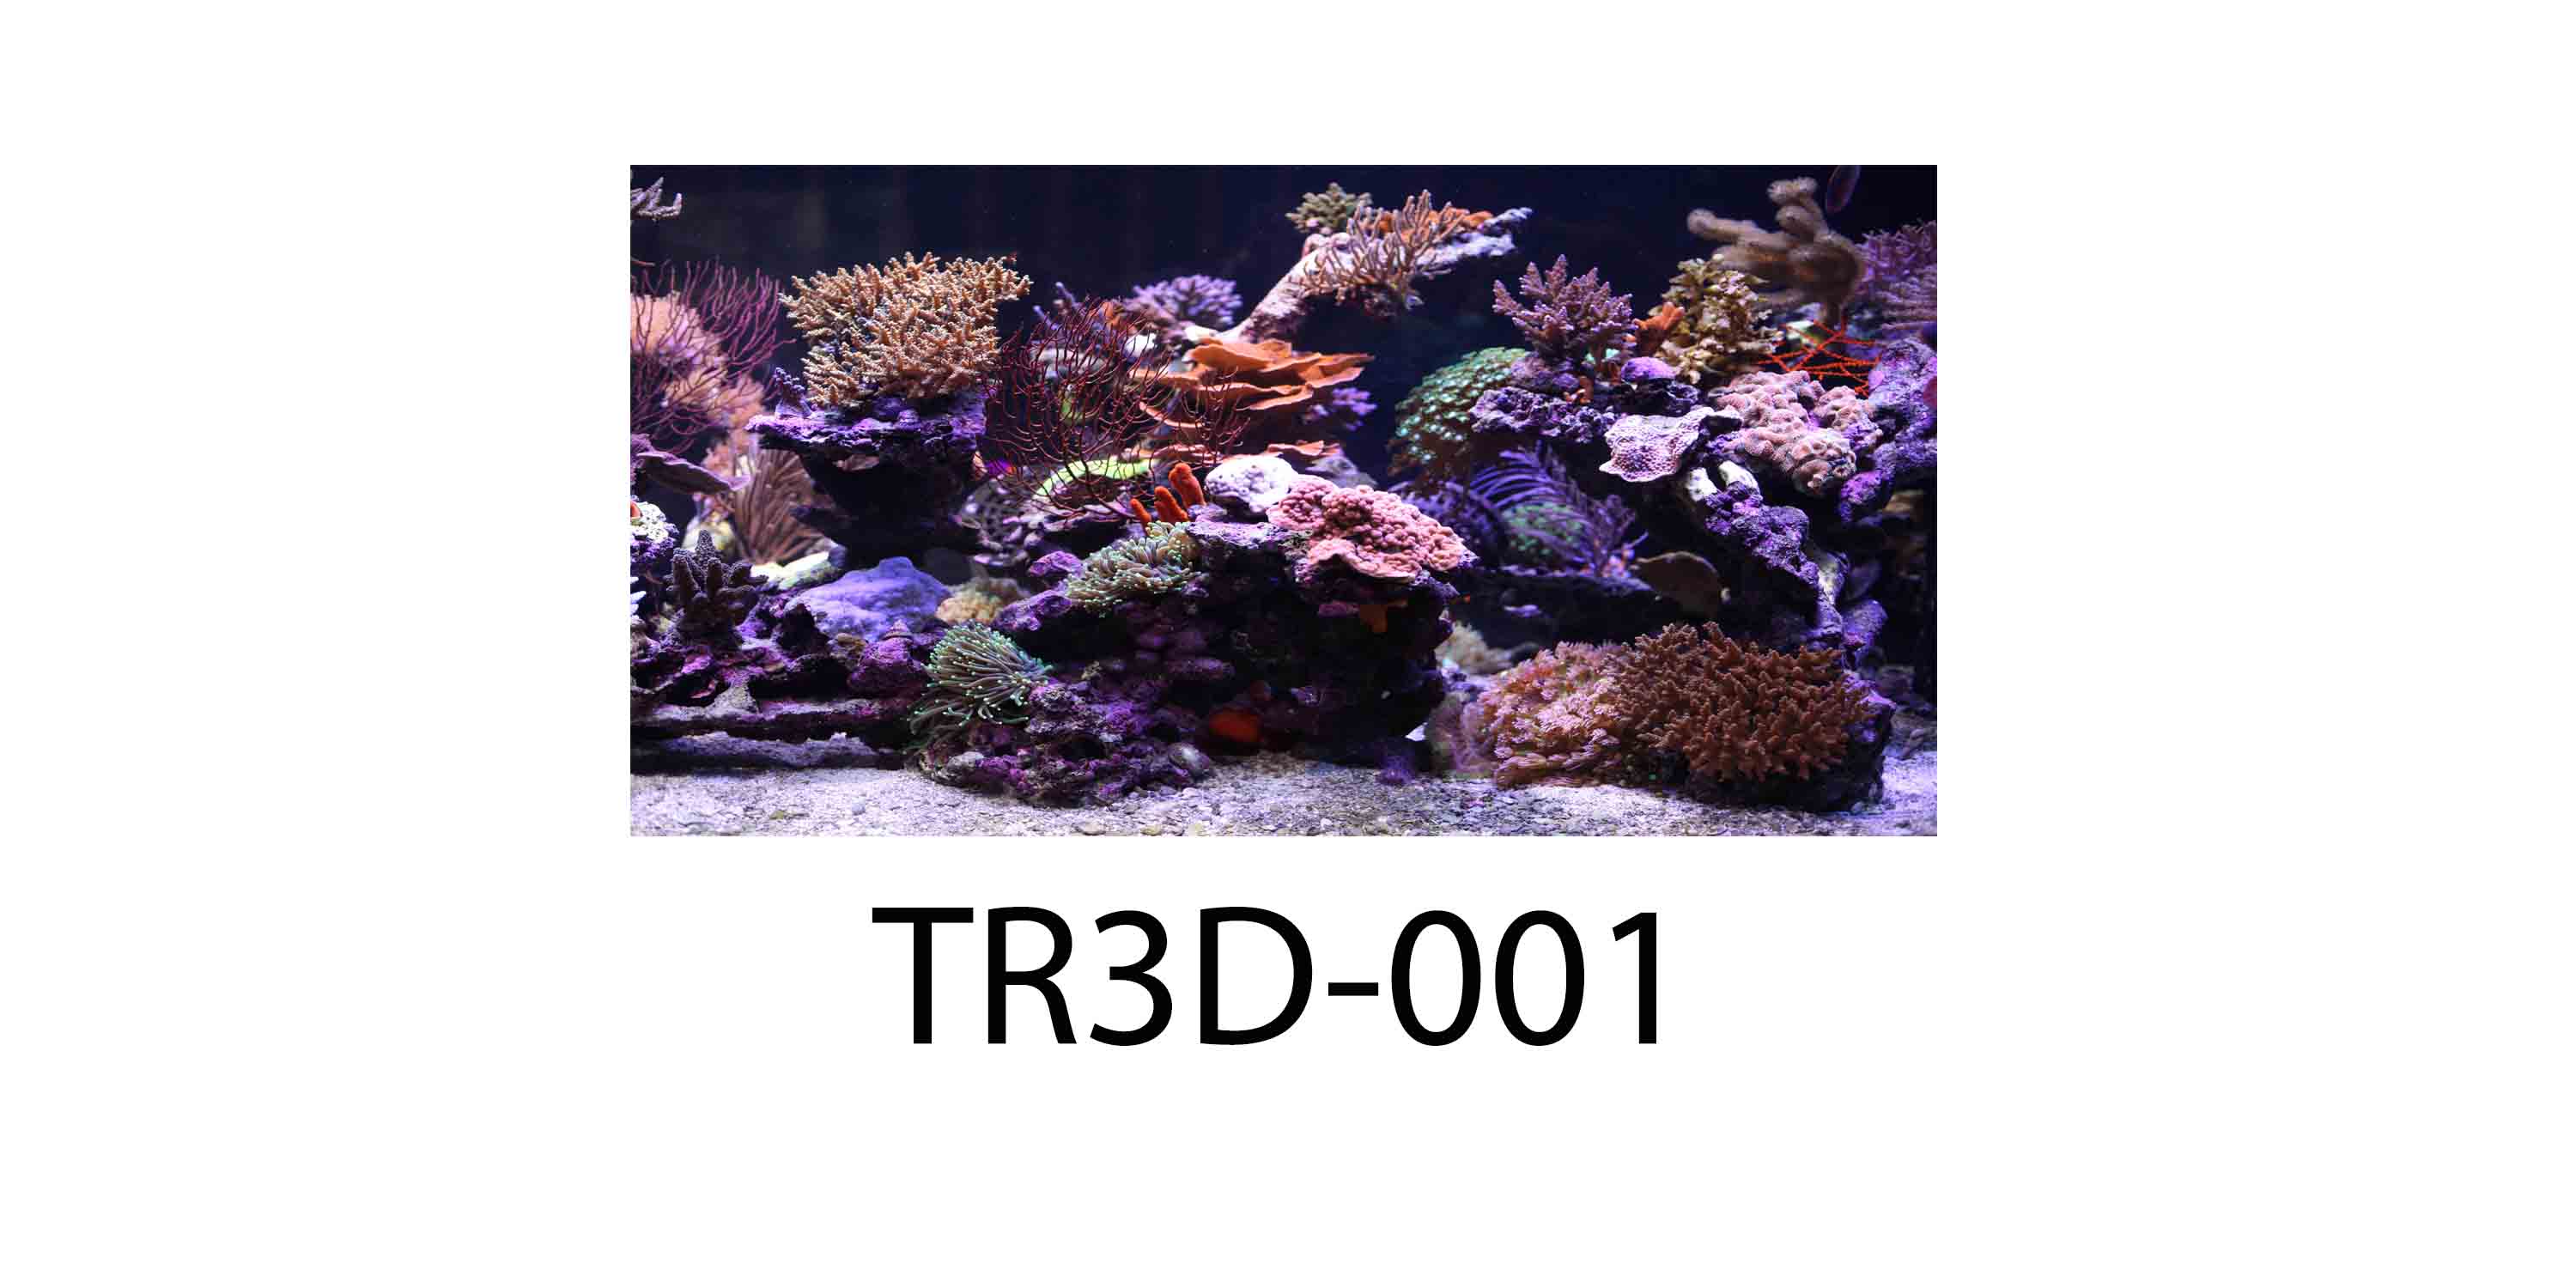 001 - Tranh hồ cá TR3D-001